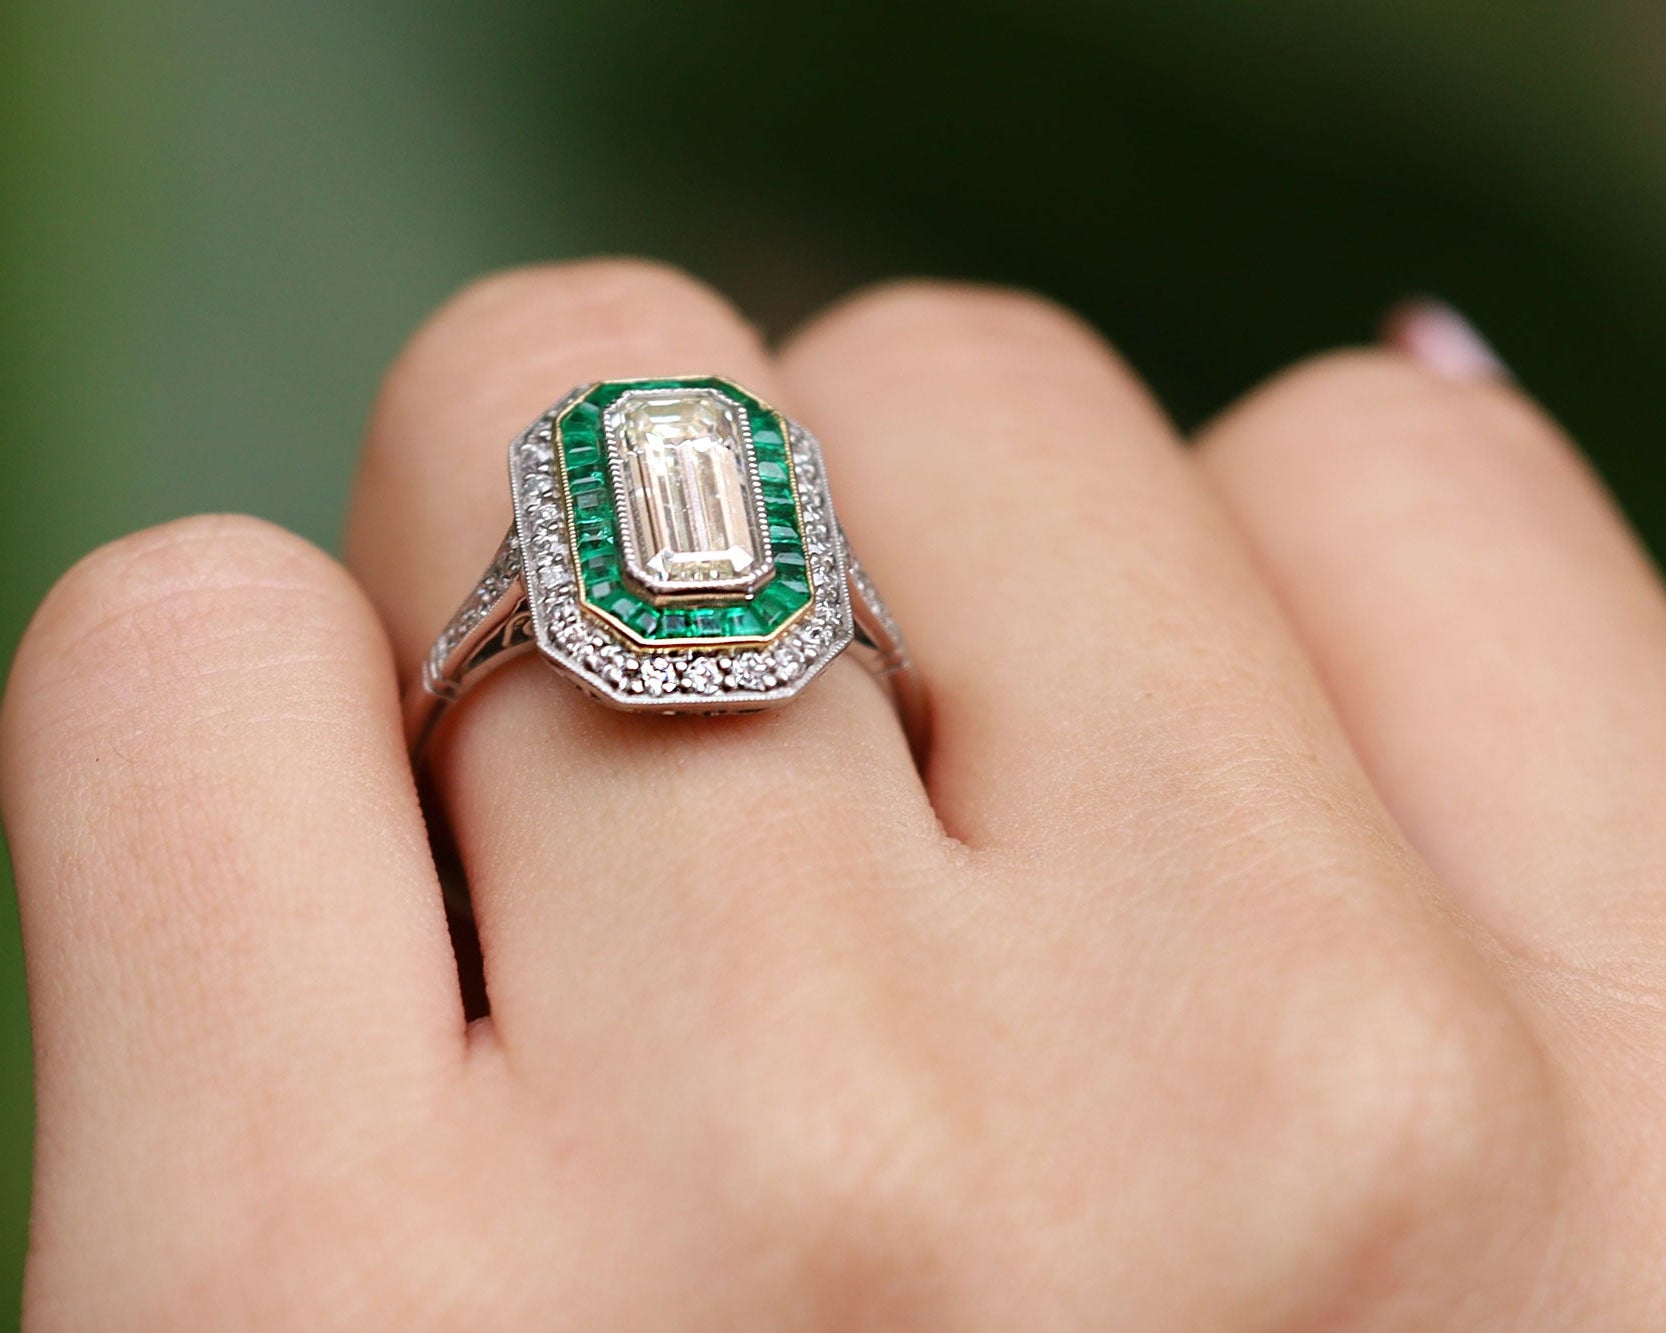 Vintage 1.45 Carat Emerald Cut Diamond & Emerald Engagement Ring